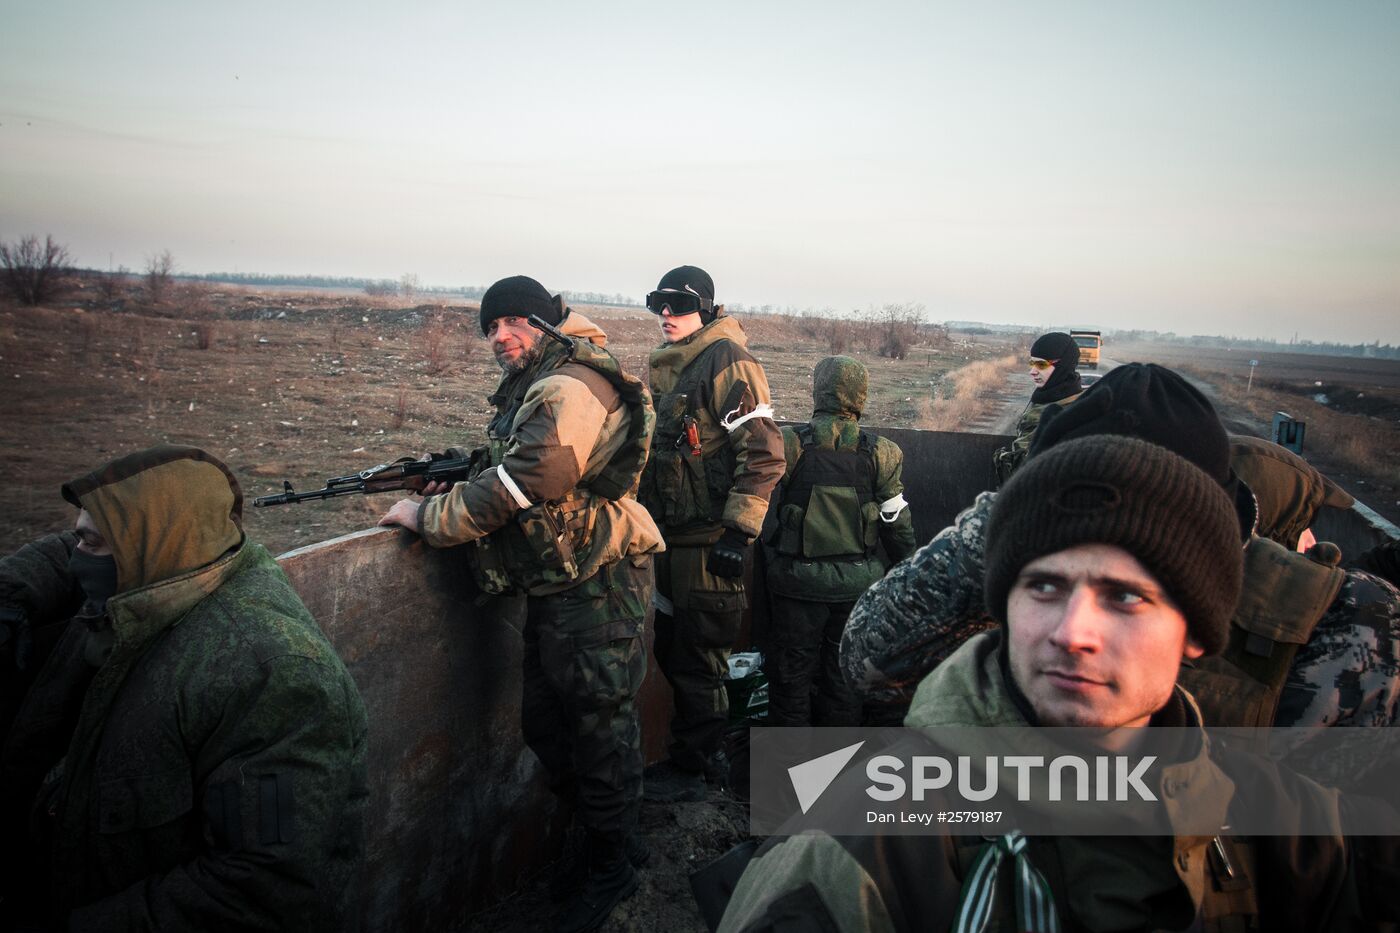 DPR militia in Donetsk Region